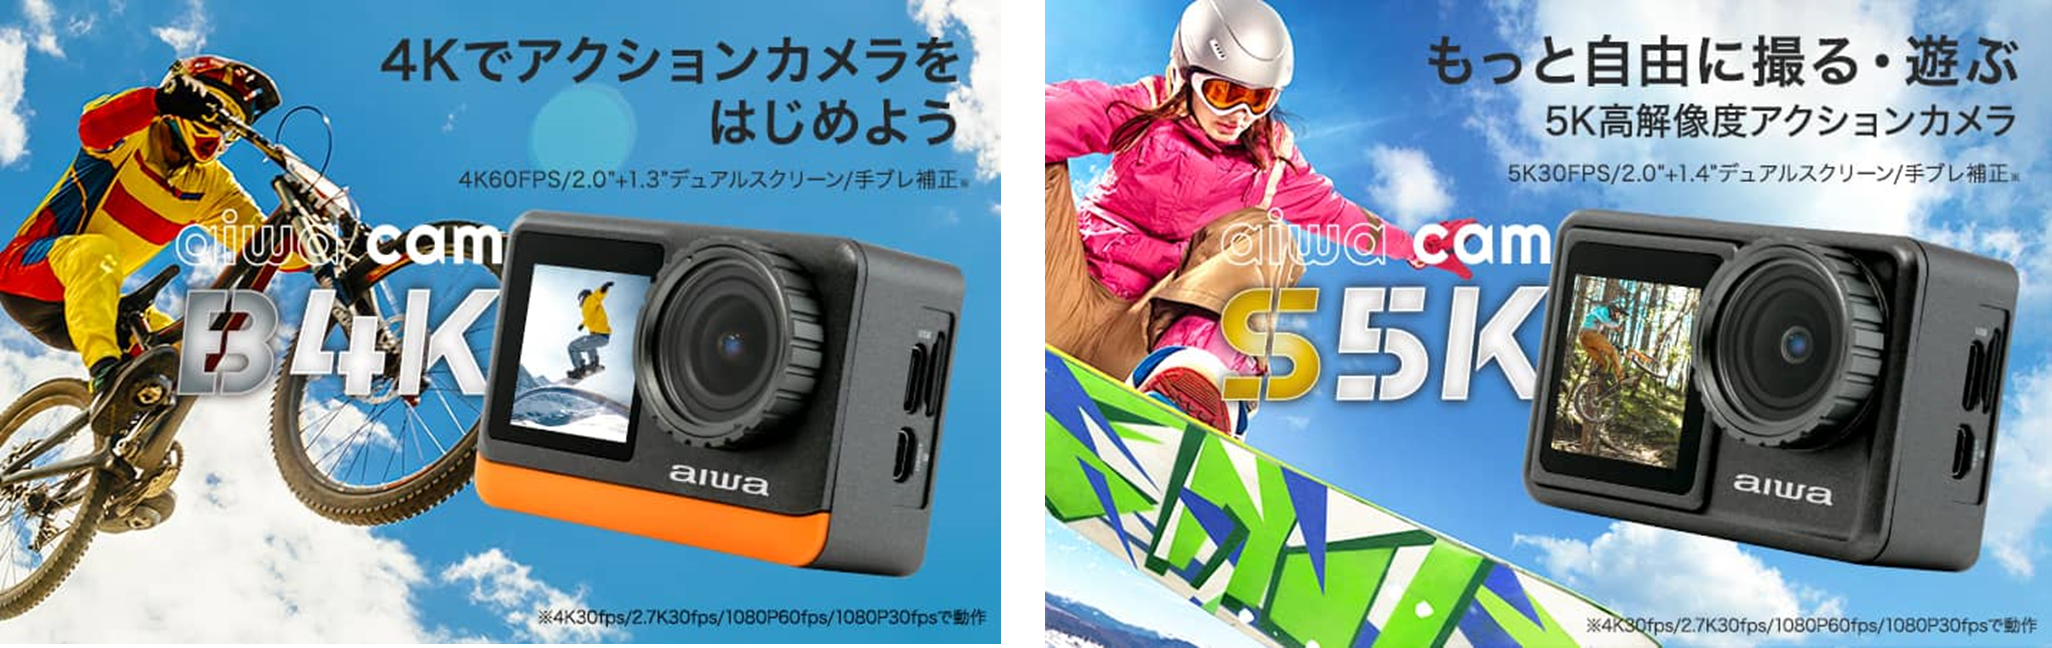 “aiwaより、豊富な機能で感動の瞬間を逃さないアクションカメラ2製品が登場”
新製品【aiwa cam B4K】および【aiwa cam S5K】を
本日より販売開始！